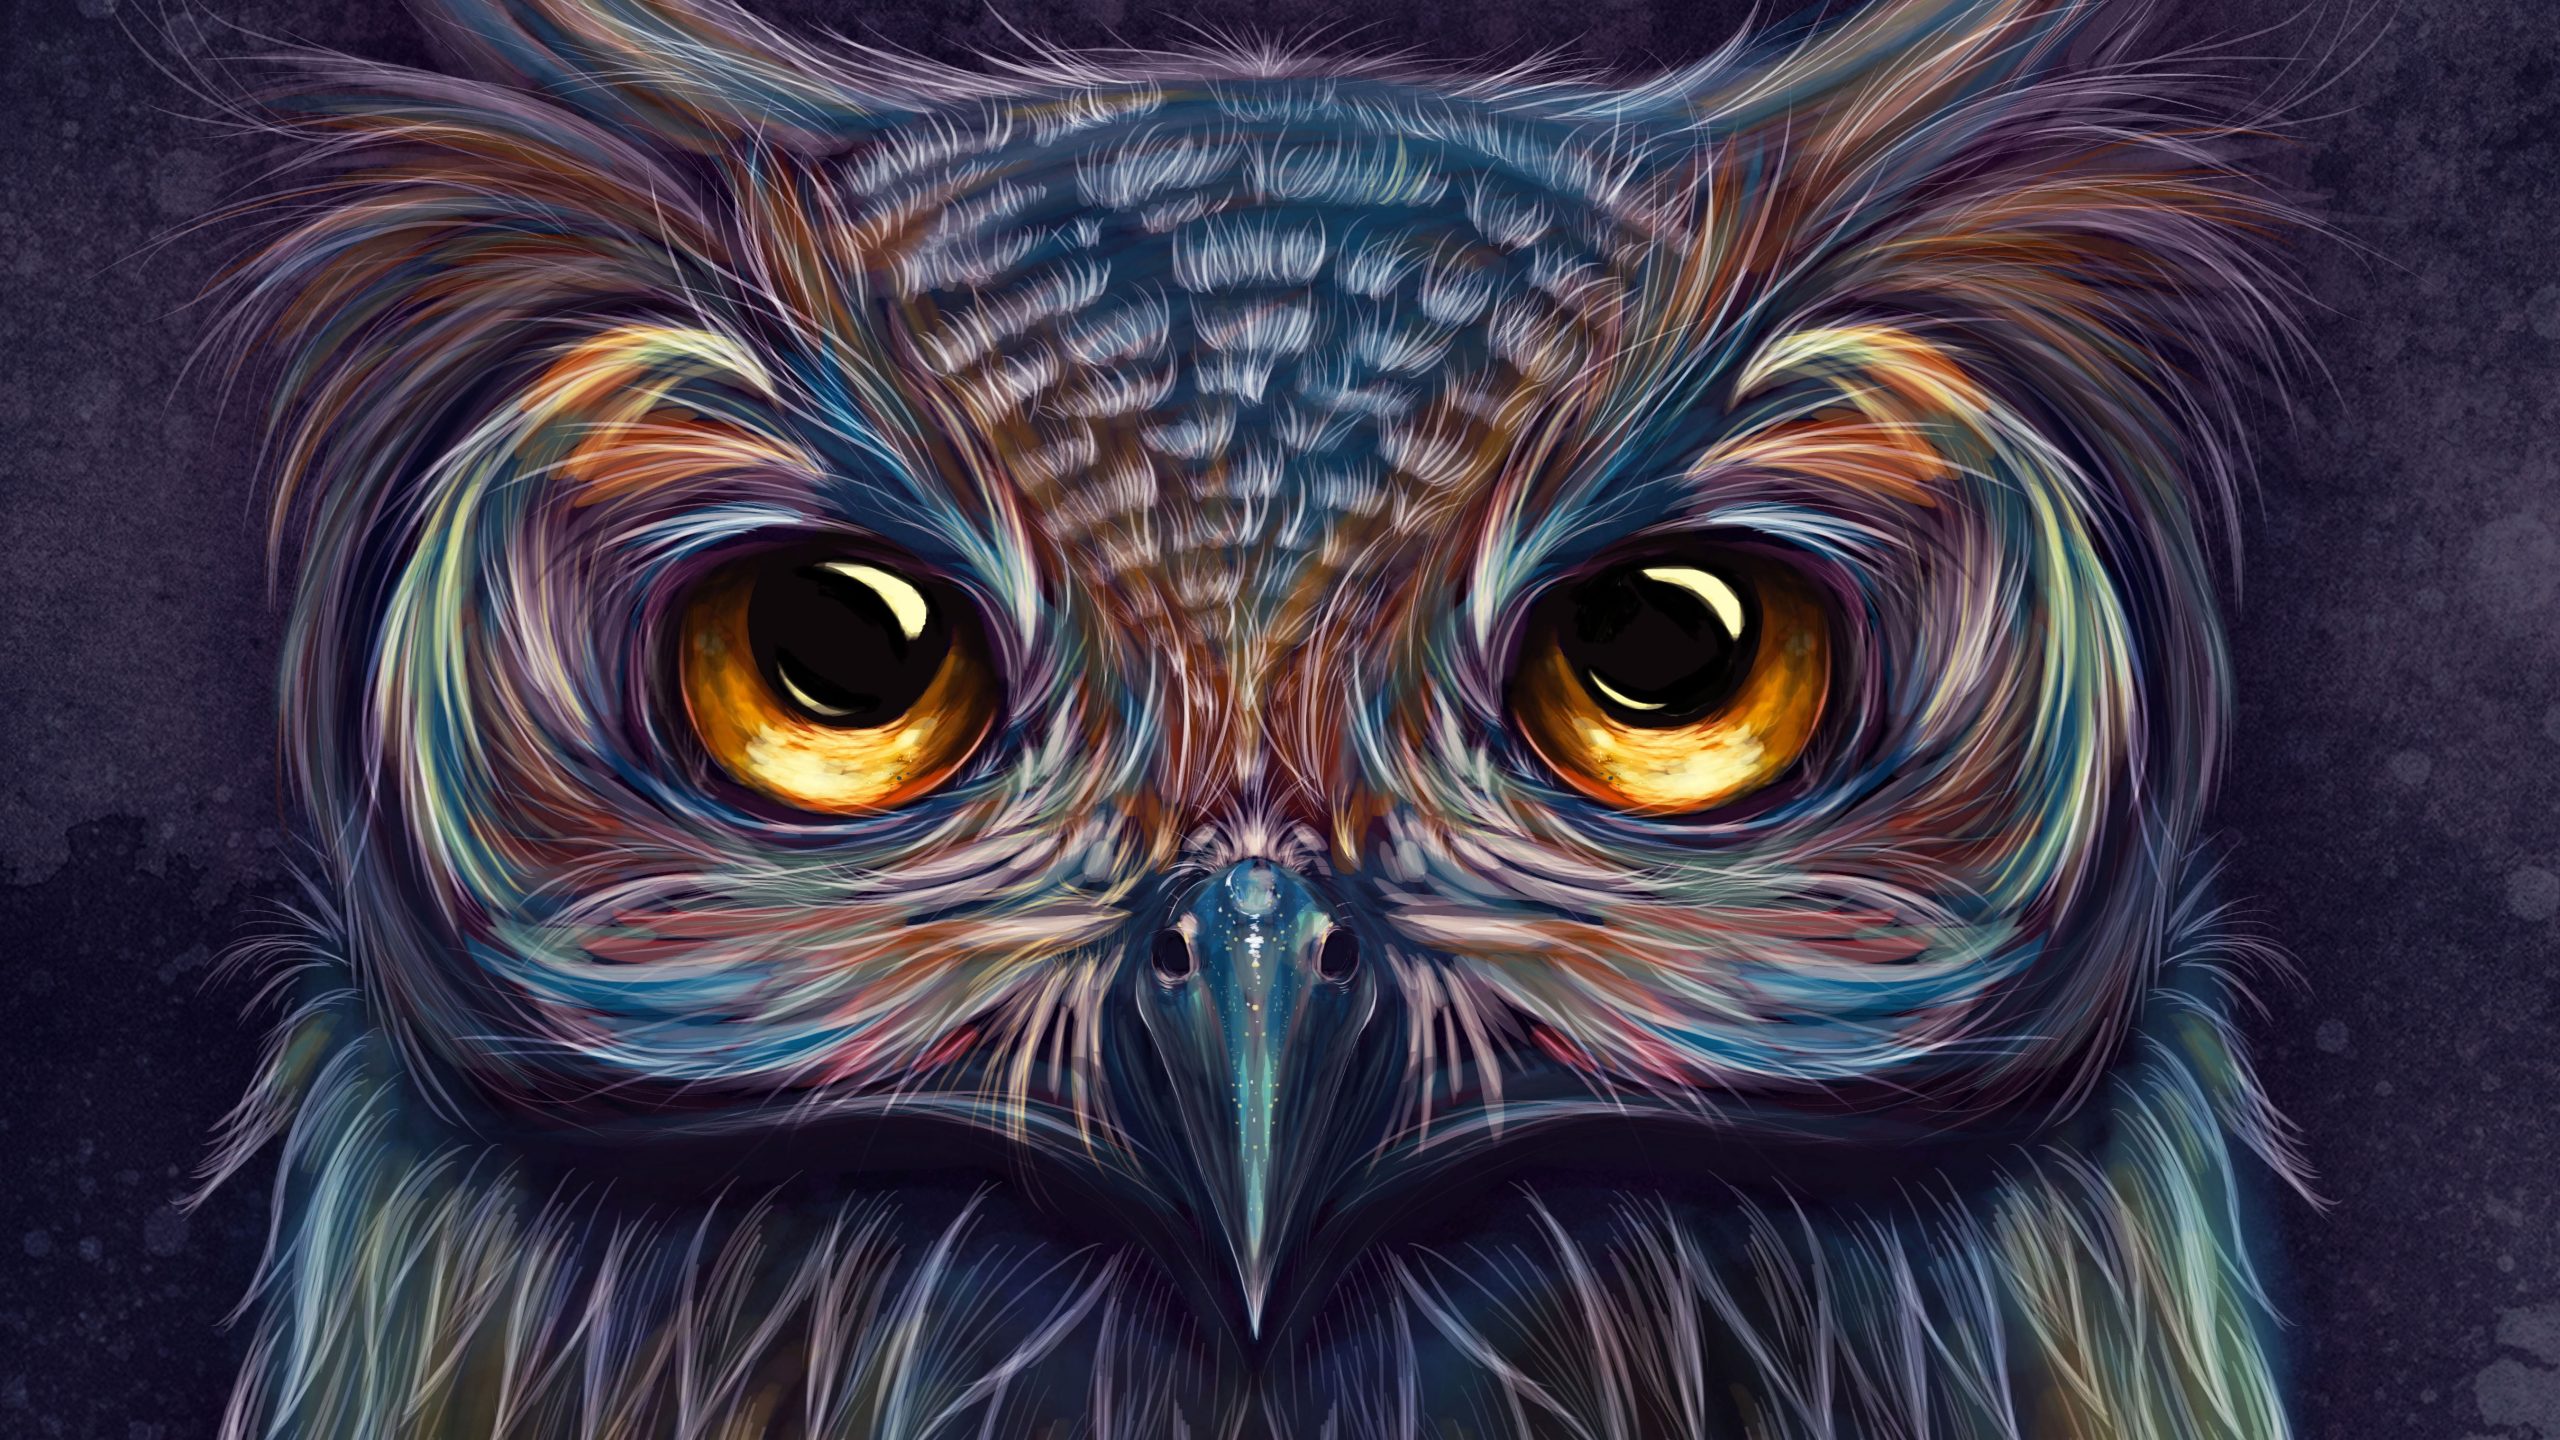 Wallpaper Owl, Colorful, Artist, Artwork - Wallpaperforu